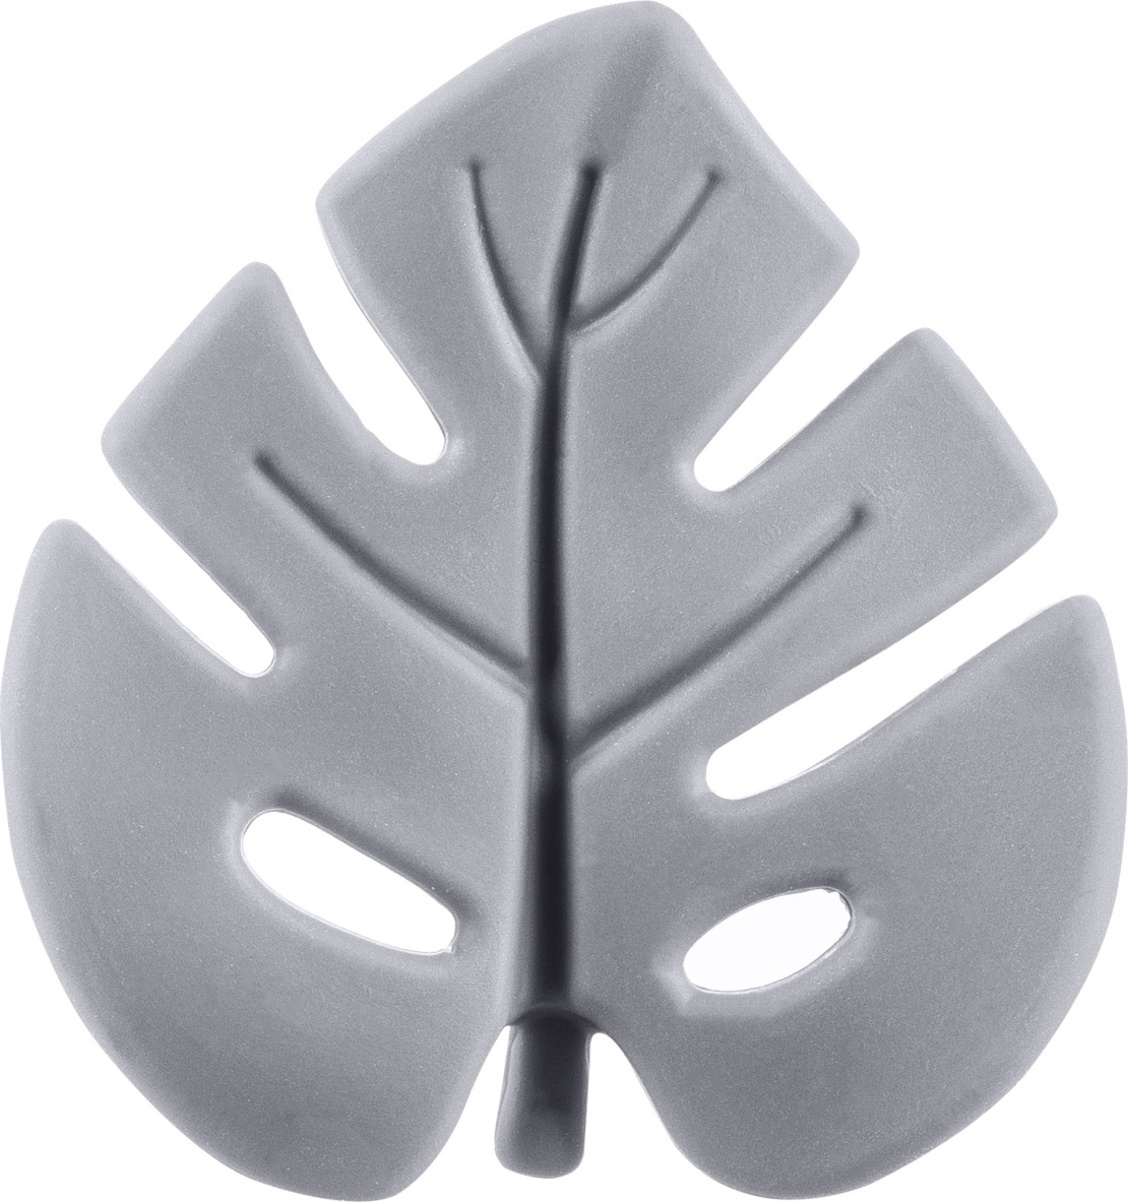 Silikonové kousátko Leaf, Dove Grey